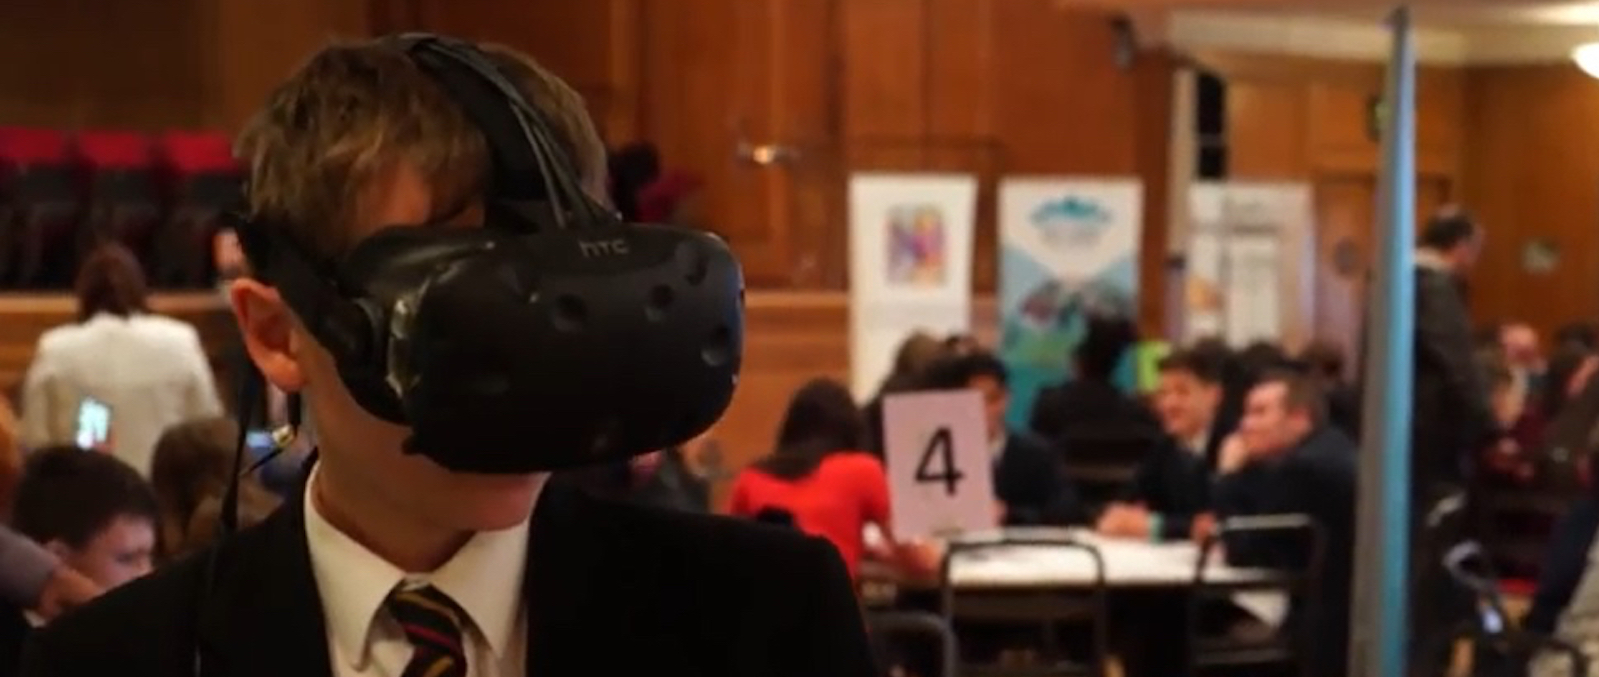 Schoolboy VR headset